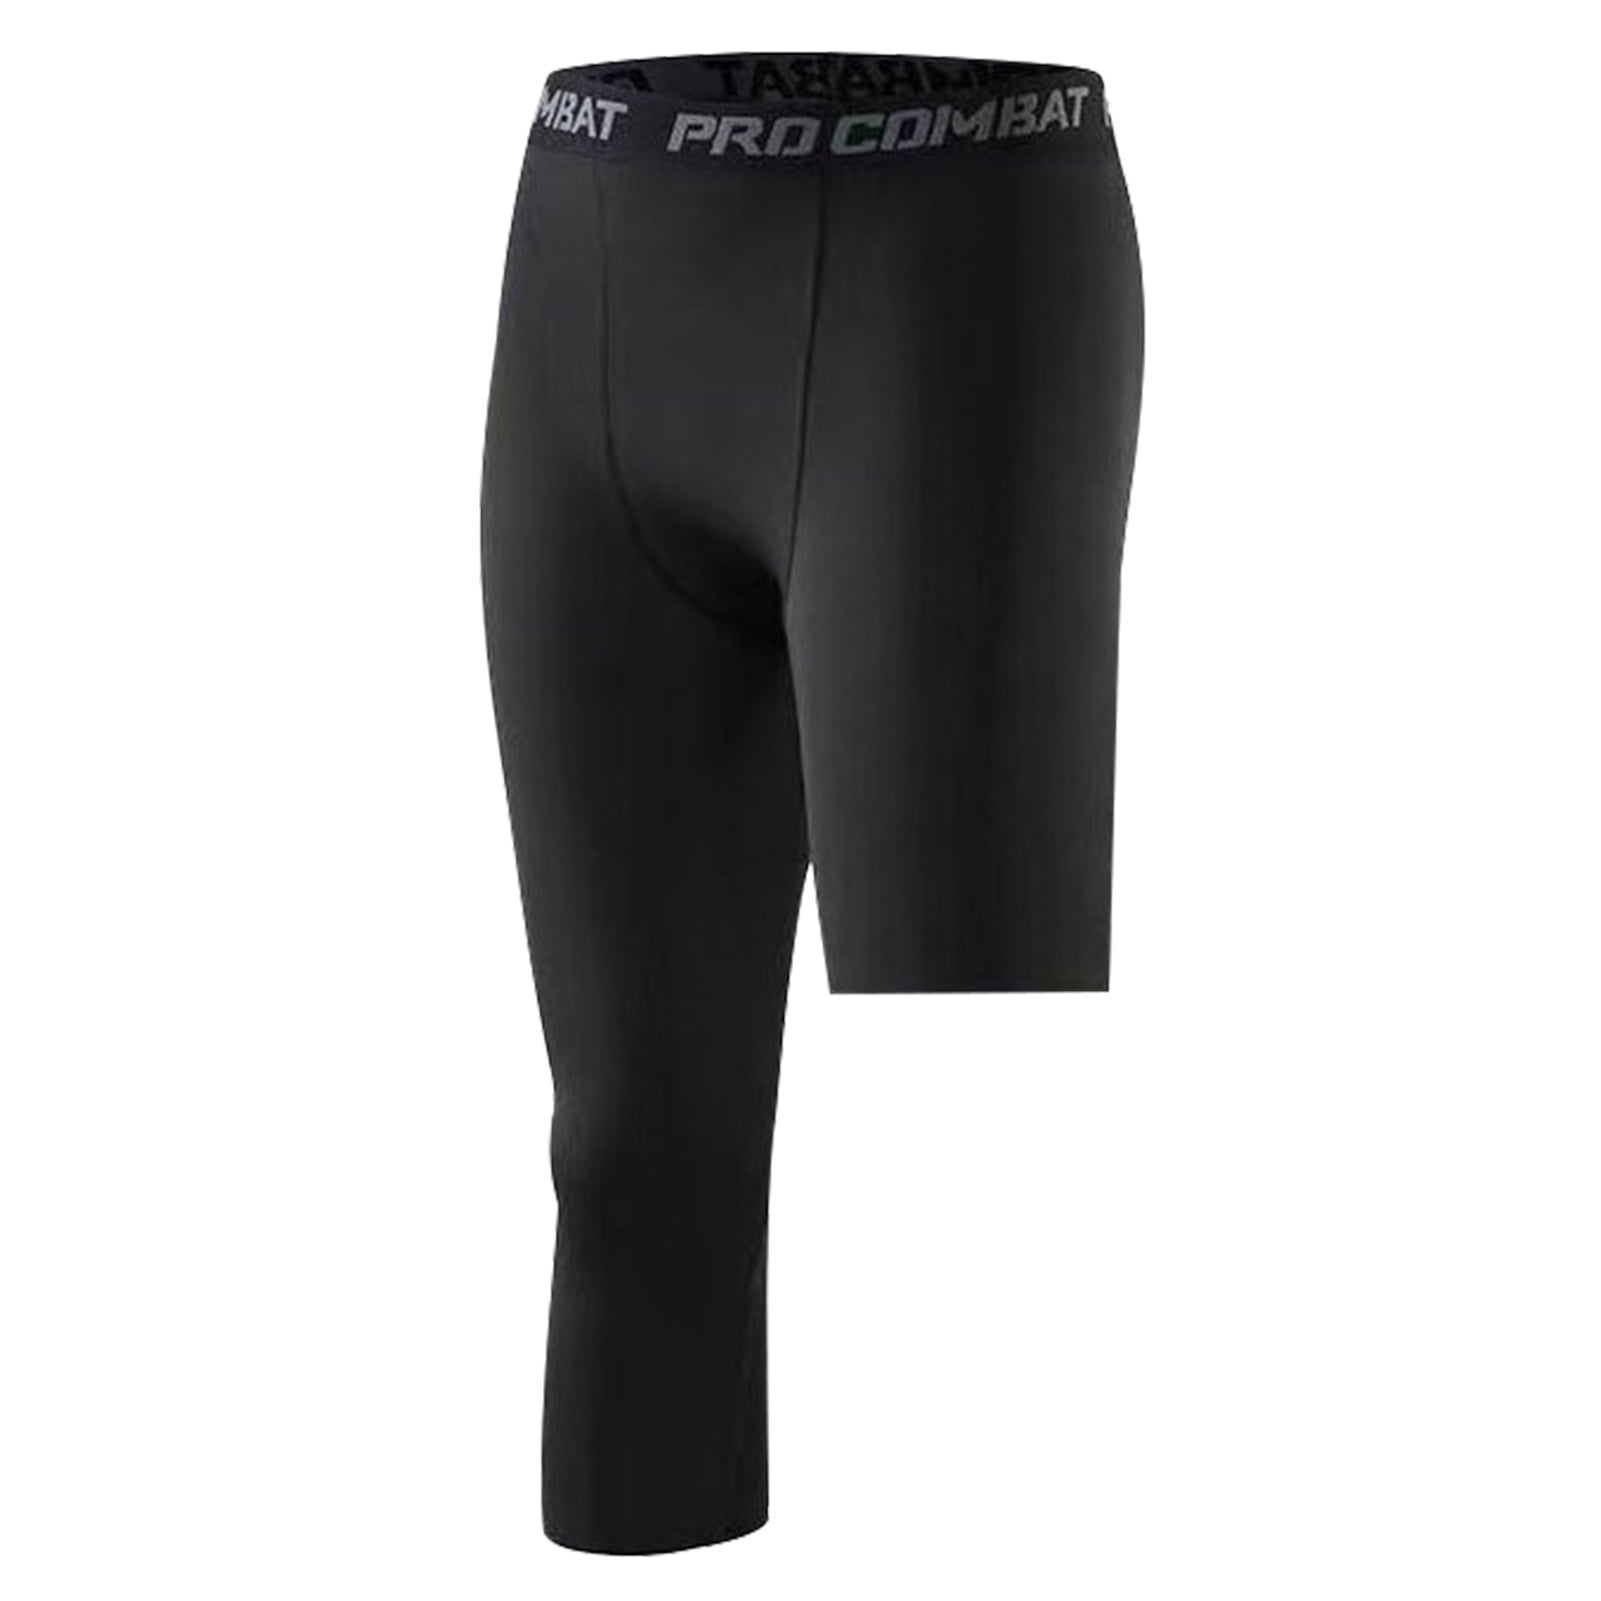 Buy Compression Pants - Men s Tights Base Layer Leggings Best Running  Workout Black Medium 31.5-34.5\ at